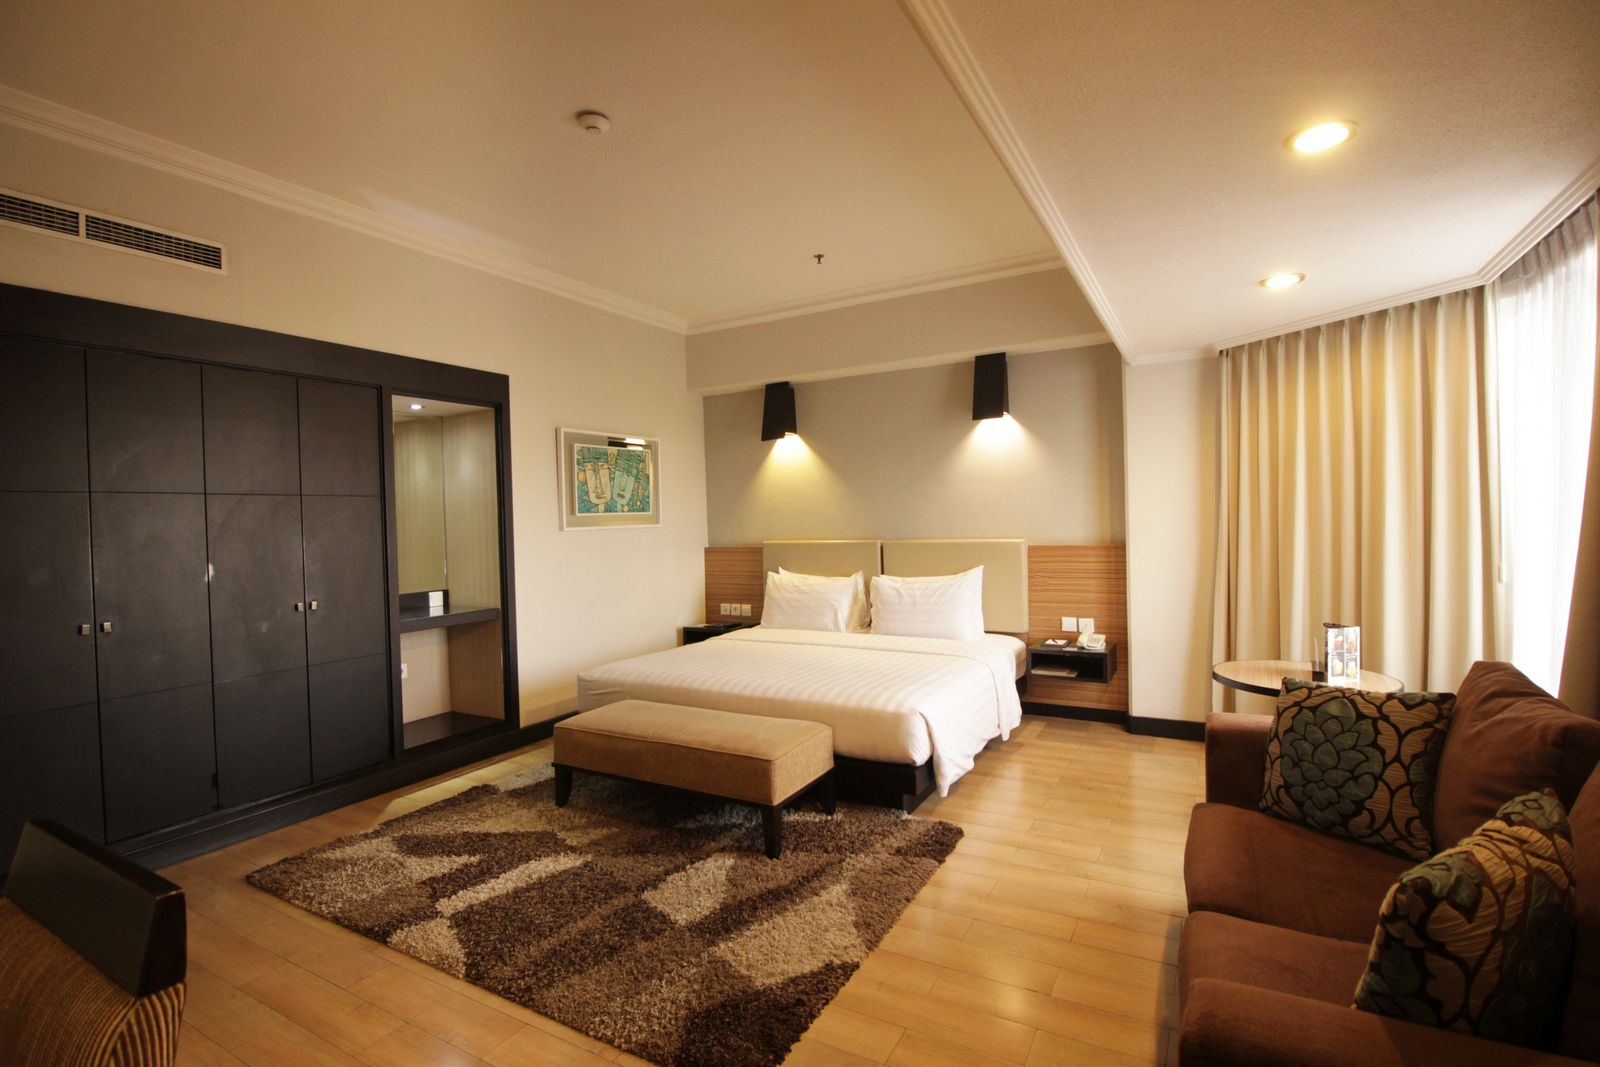 Bedroom 4, Hotel Santika Premiere Jogja, Yogyakarta